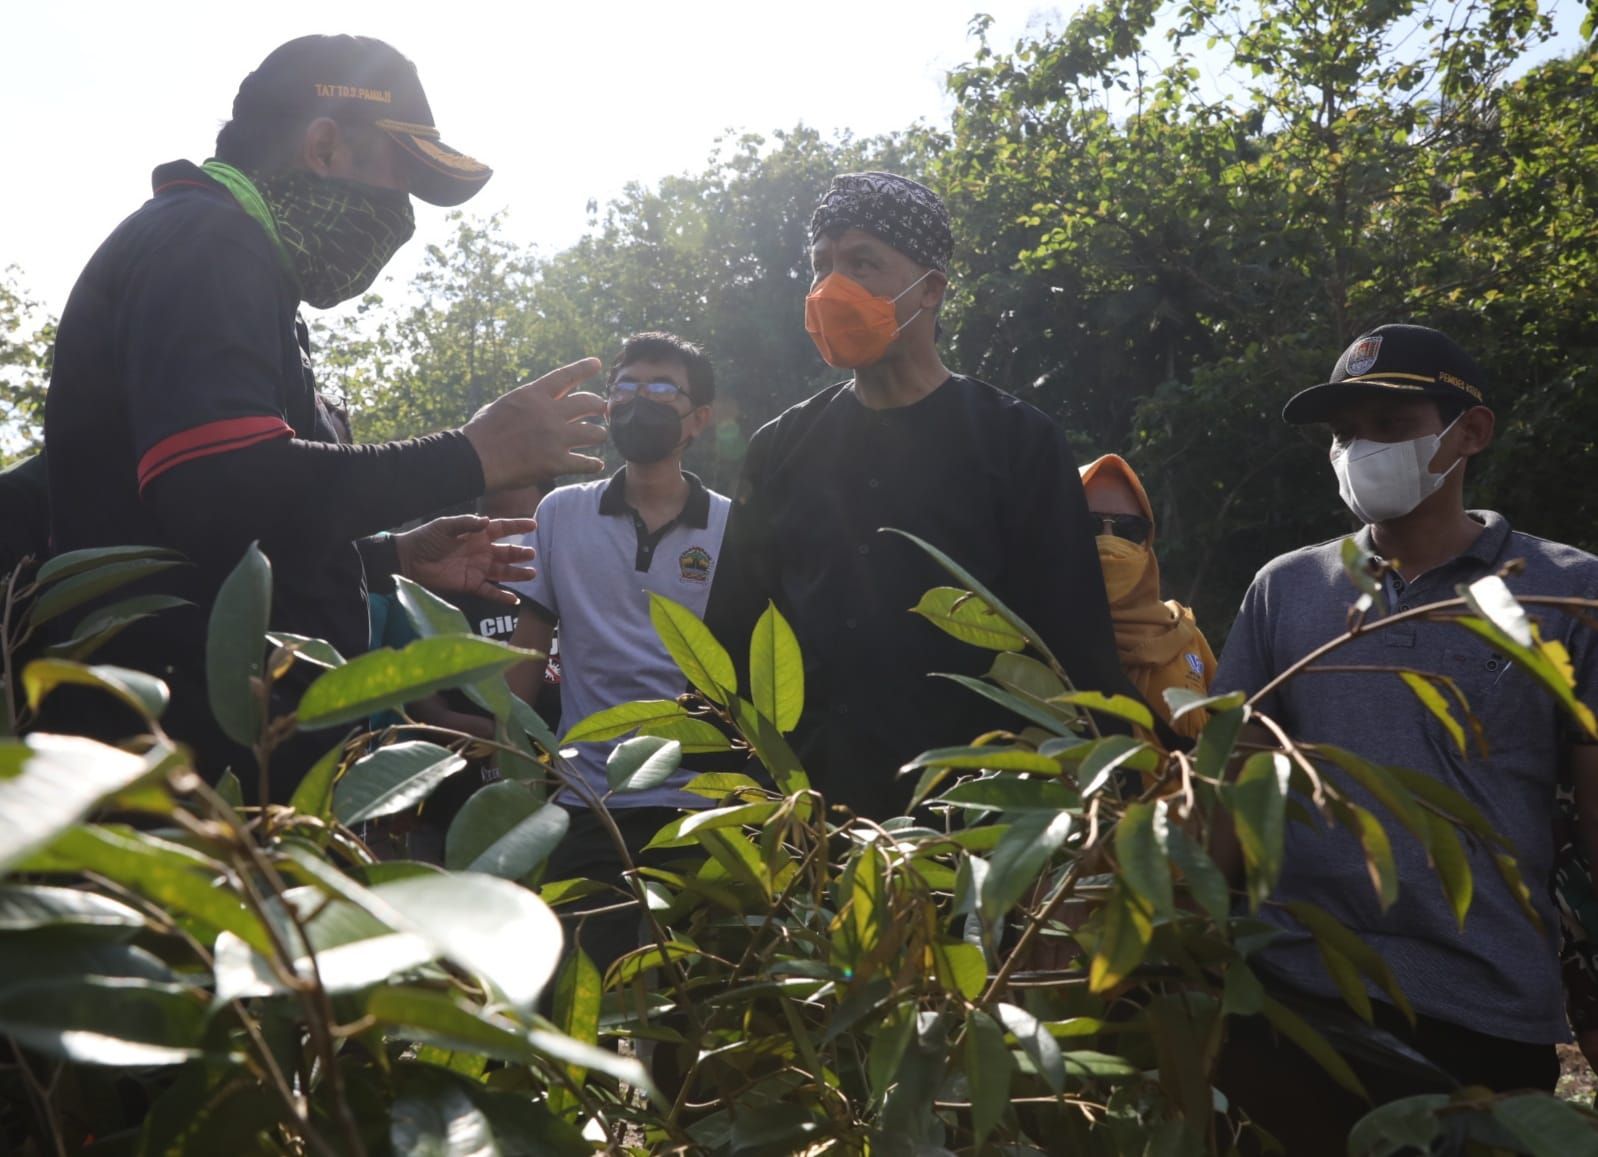 Gubernur Ganjar Pranowo bersama warga melakukan penanaman pohon penghijauan untuk pemulihan ekosistem hutan rakyat di kawasan aliran Sungai Serayu di Desa Pesanggrahan, Cilacap, Kamis, 18 November 2021